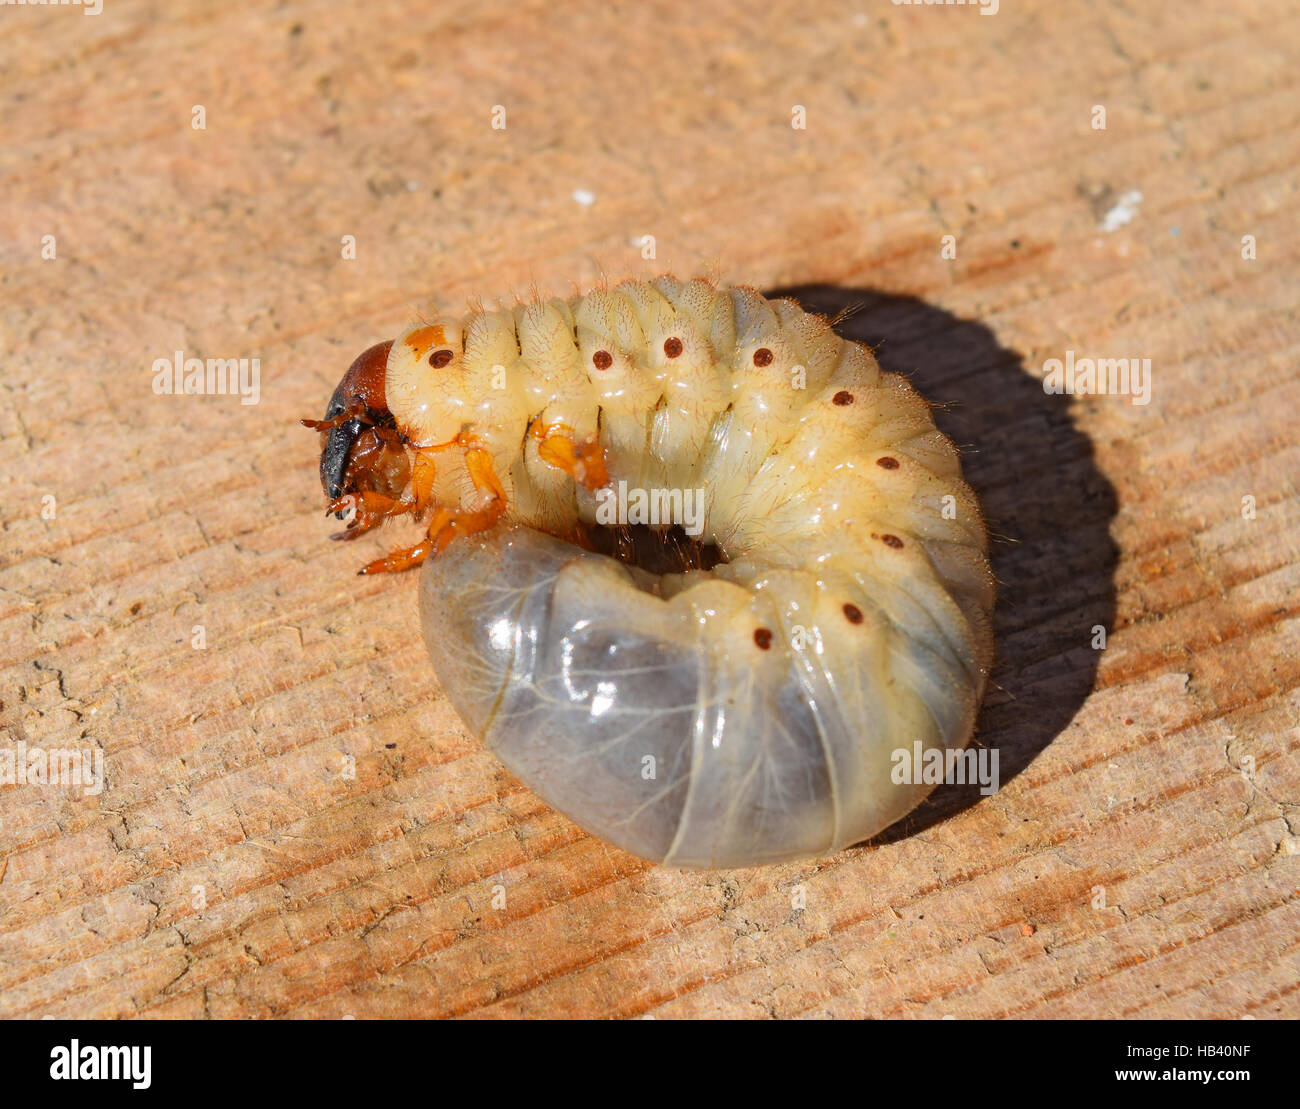 Potato Bug Larvae High Resolution Stock Photography And Images Alamy